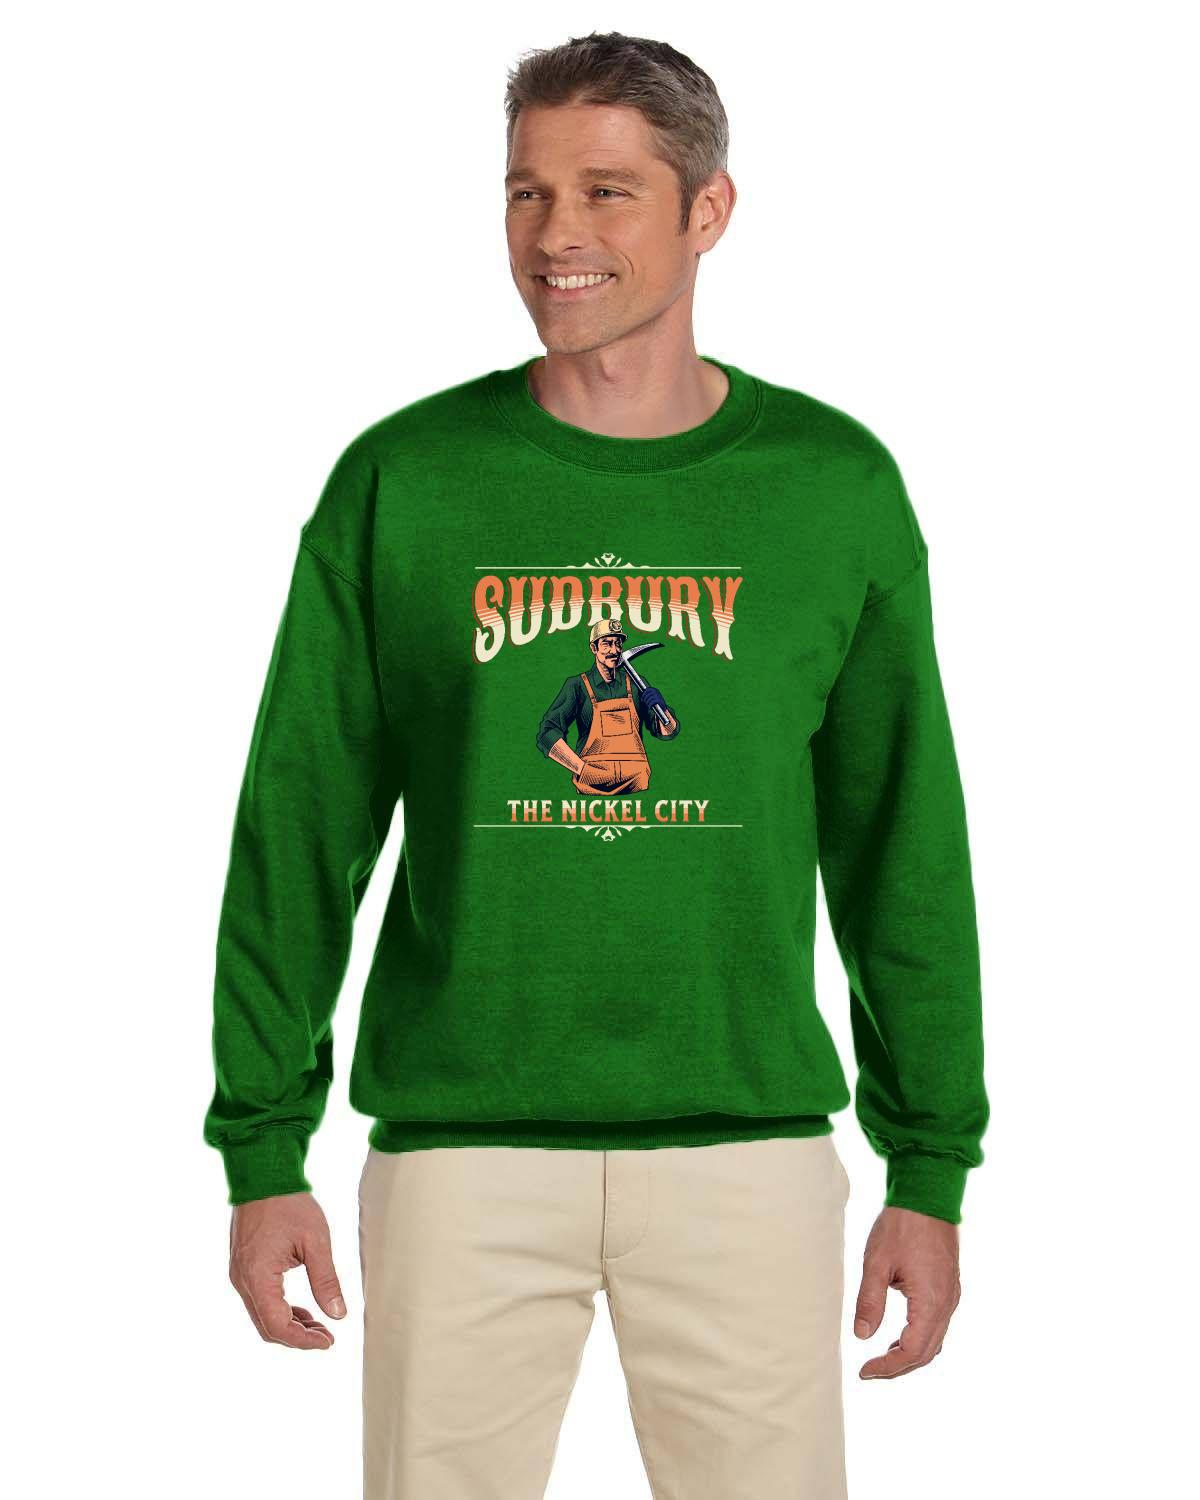 Canadian City Sweatshirt, Sudbury, Ontario, Miner Design, The Nickel City, Men's Sweatshirt S1